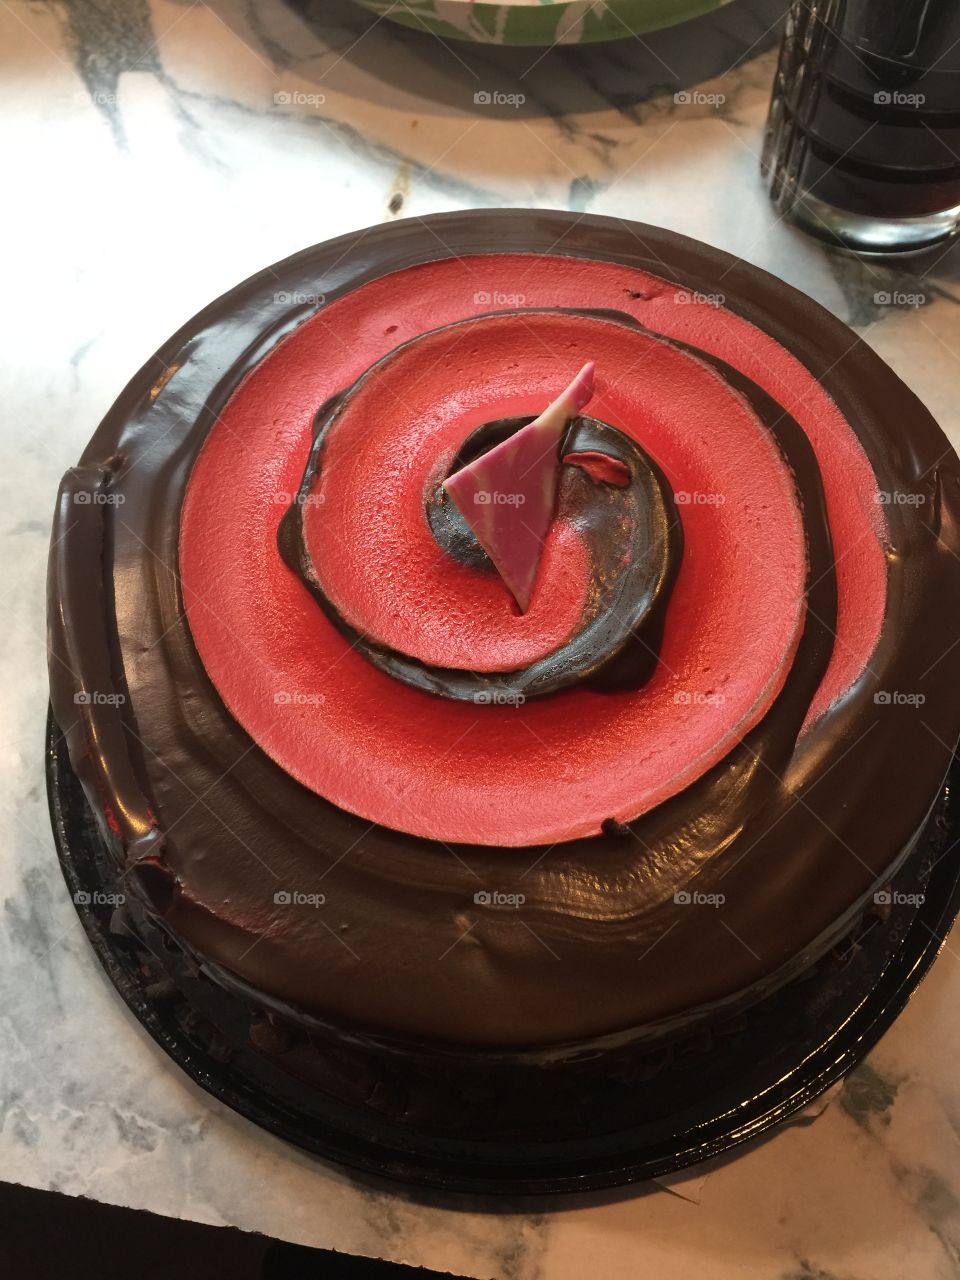 Red devil chocolate cake 